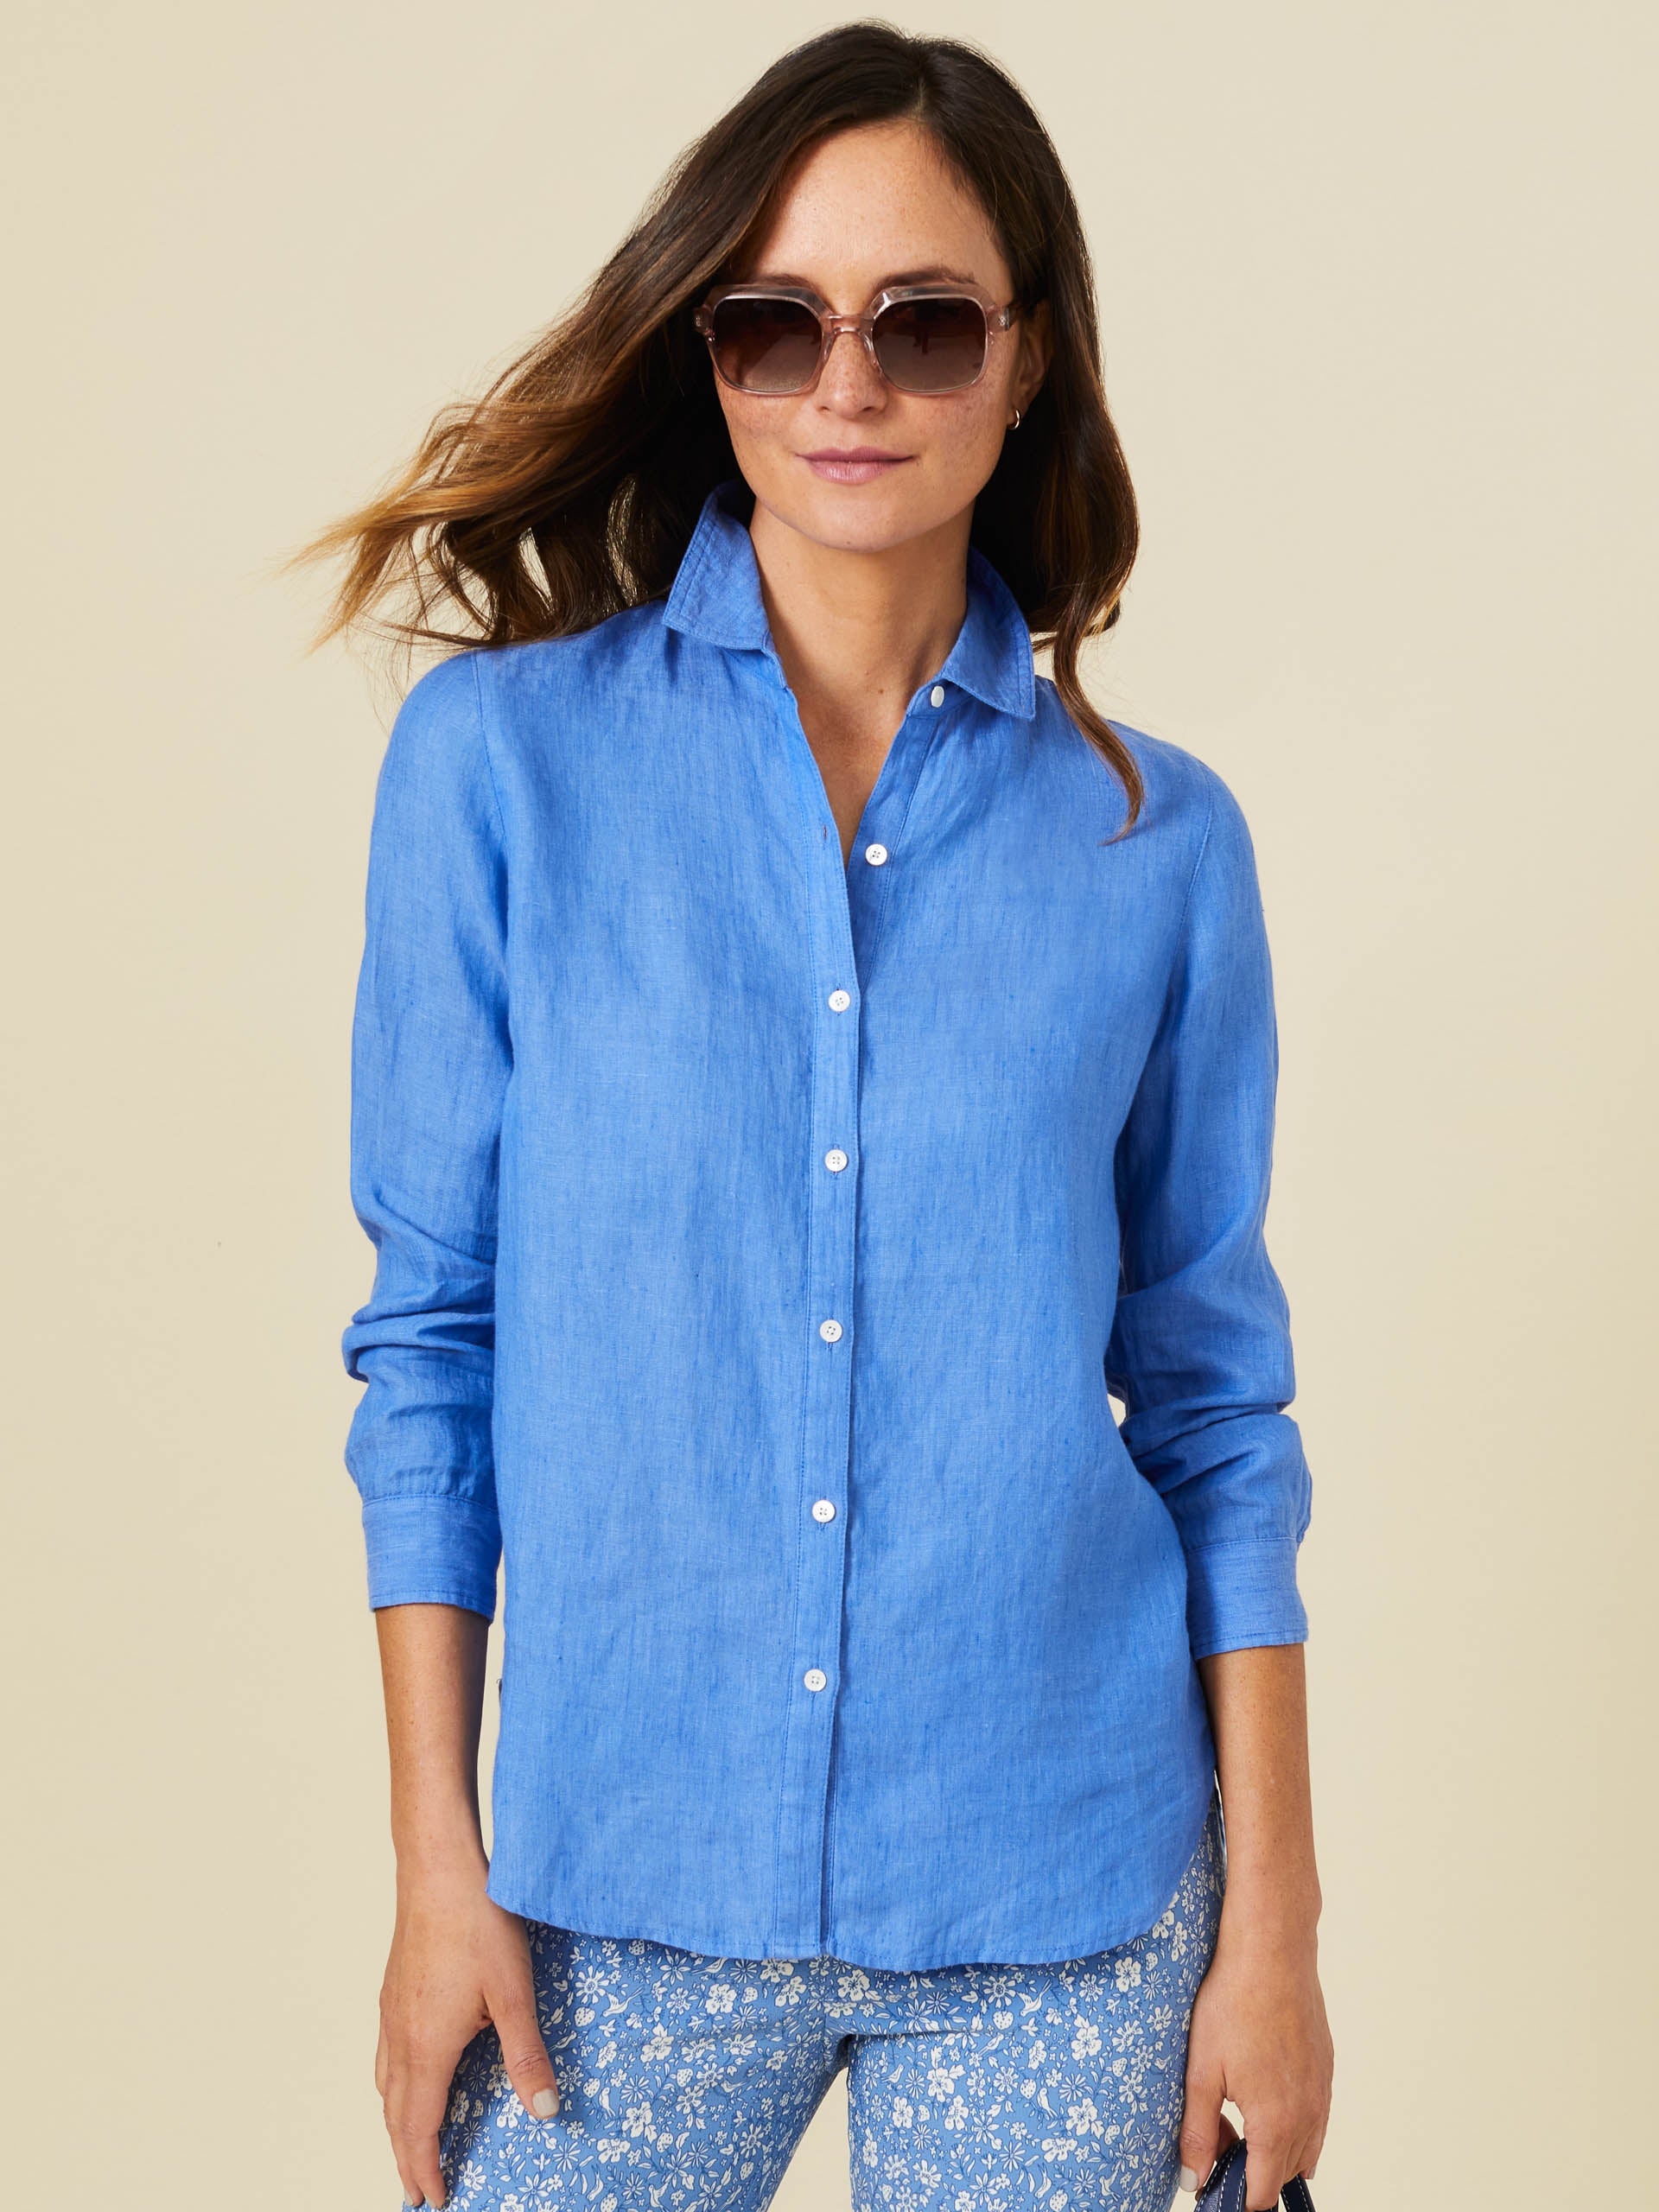 Model wearing J.McLaughlin Britt shirt in french blue made with linen.